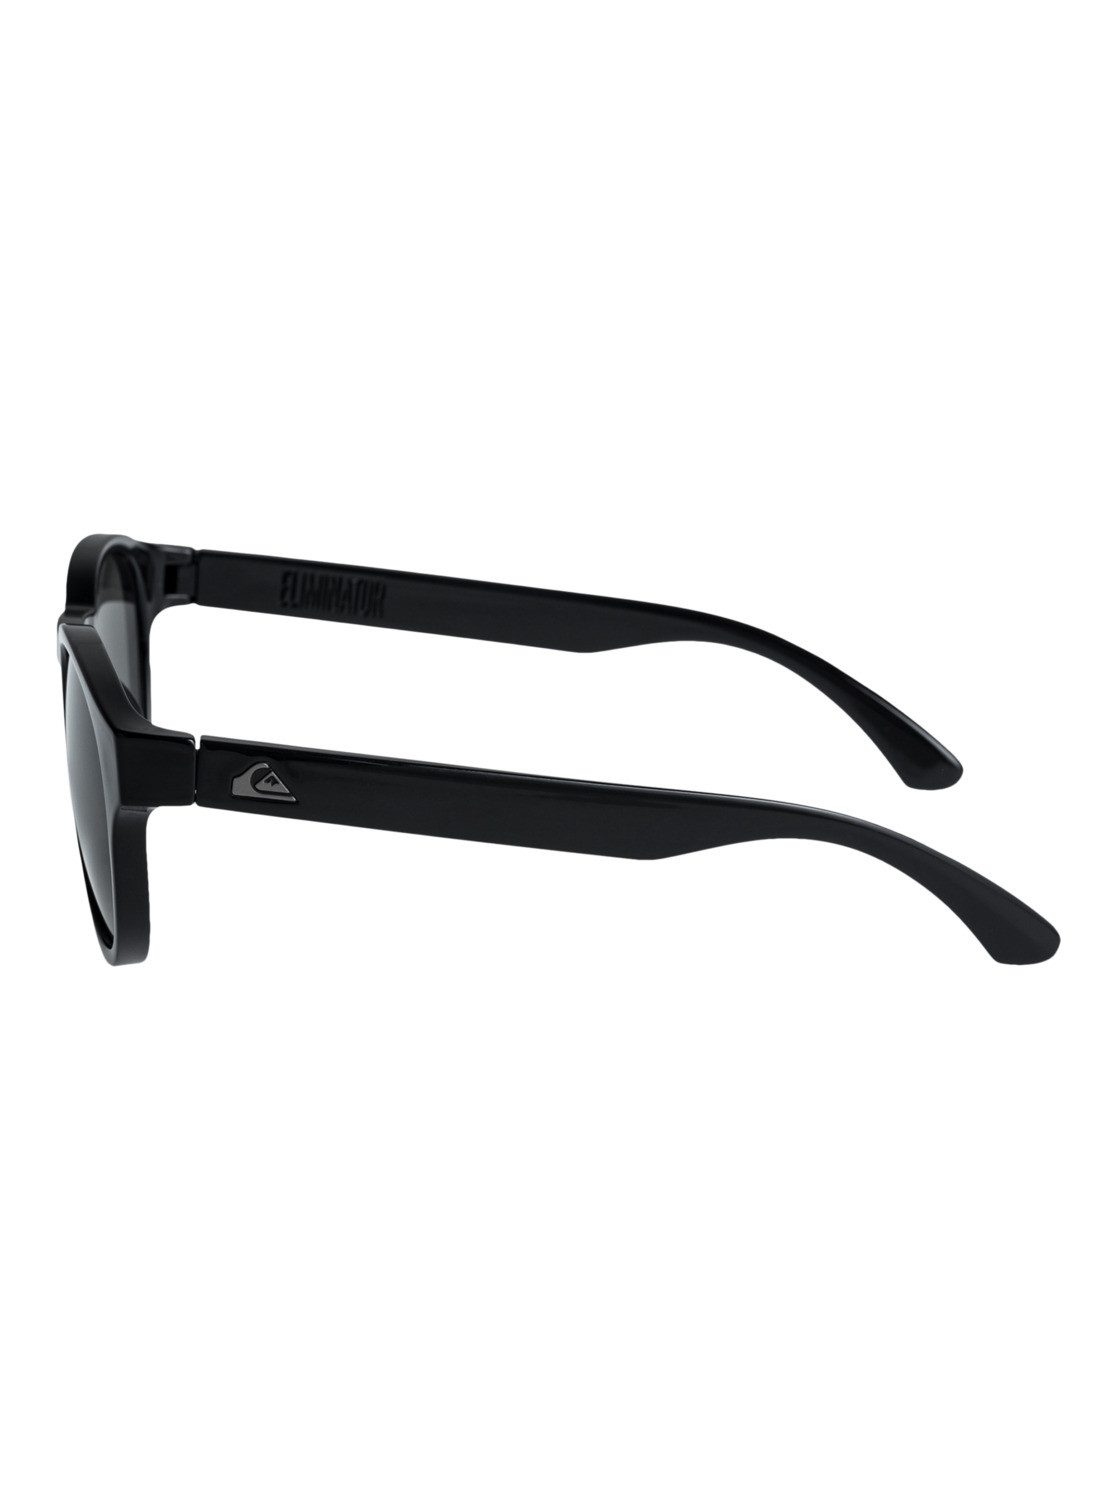 Quiksilver Sonnenbrille Eliminator Black/Grey